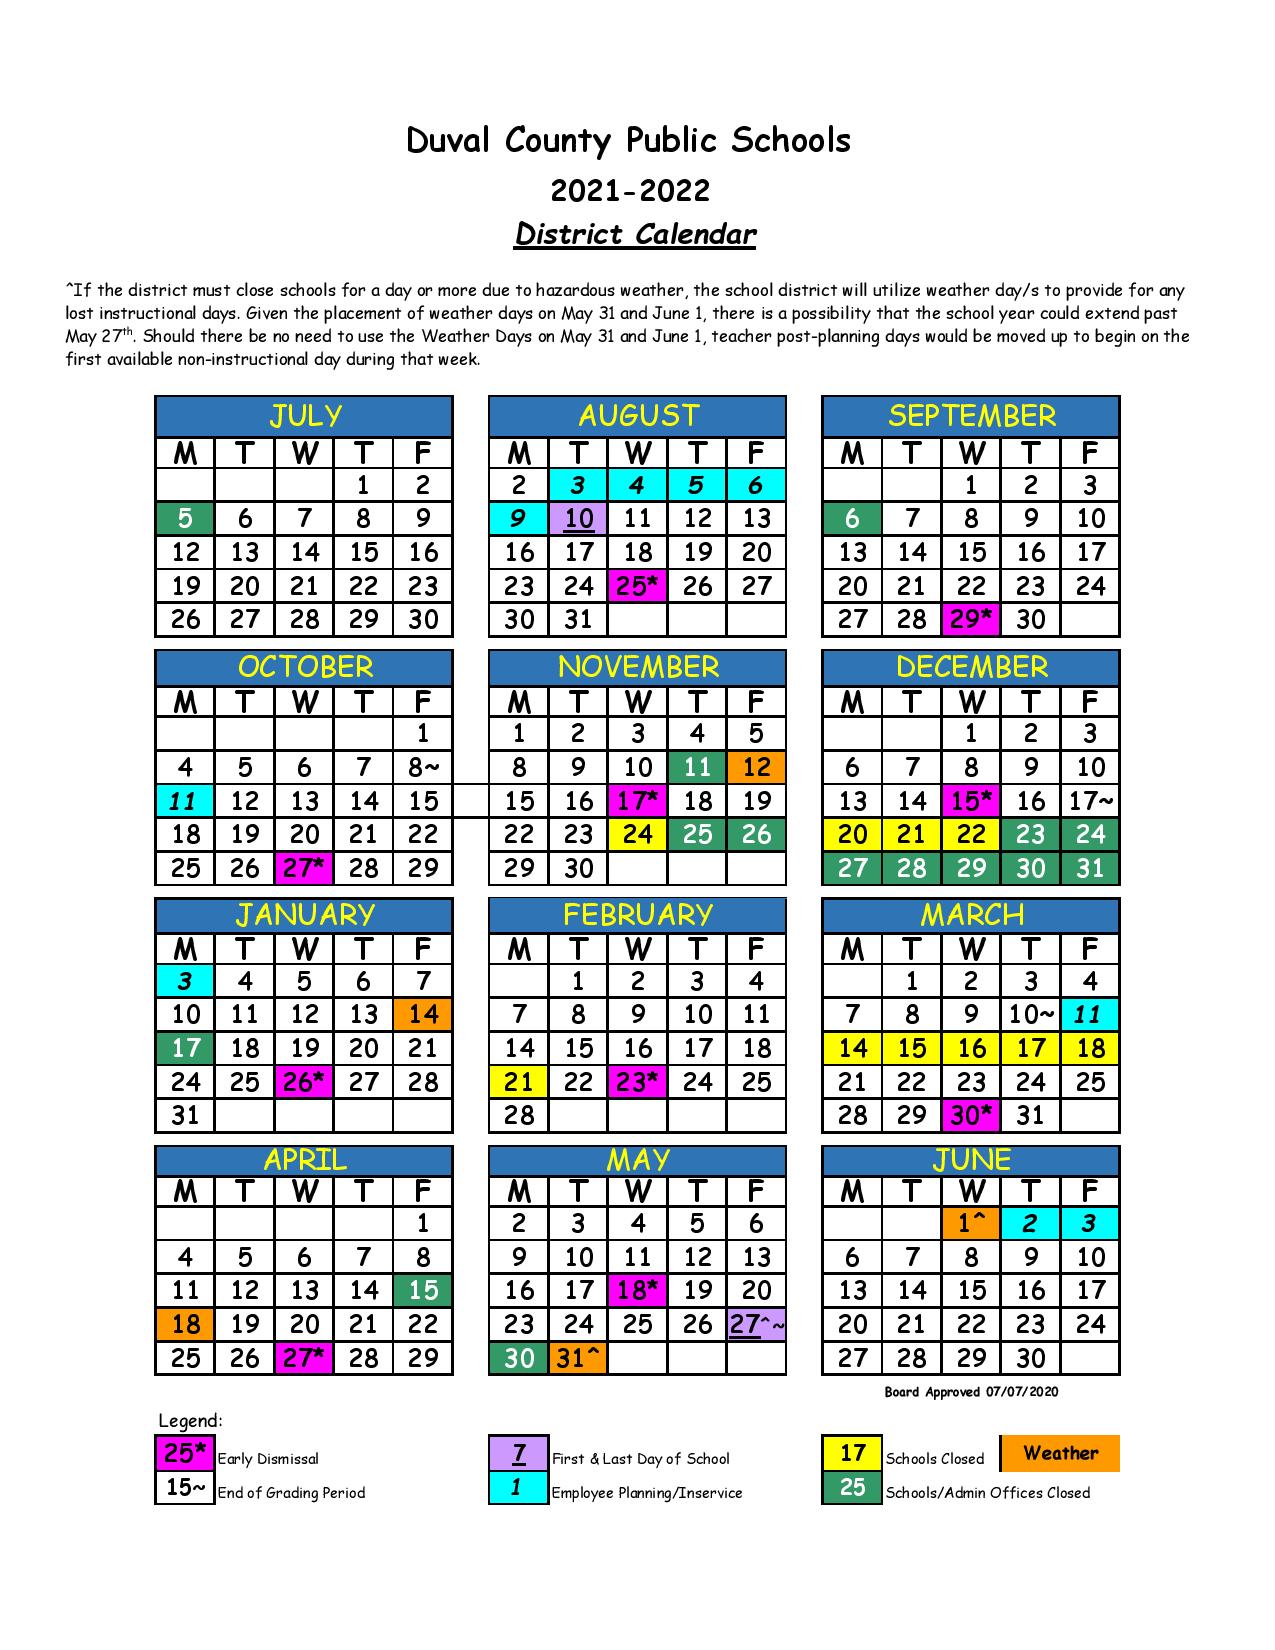 Duval County Public Schools Calendar 20212022 in PDF